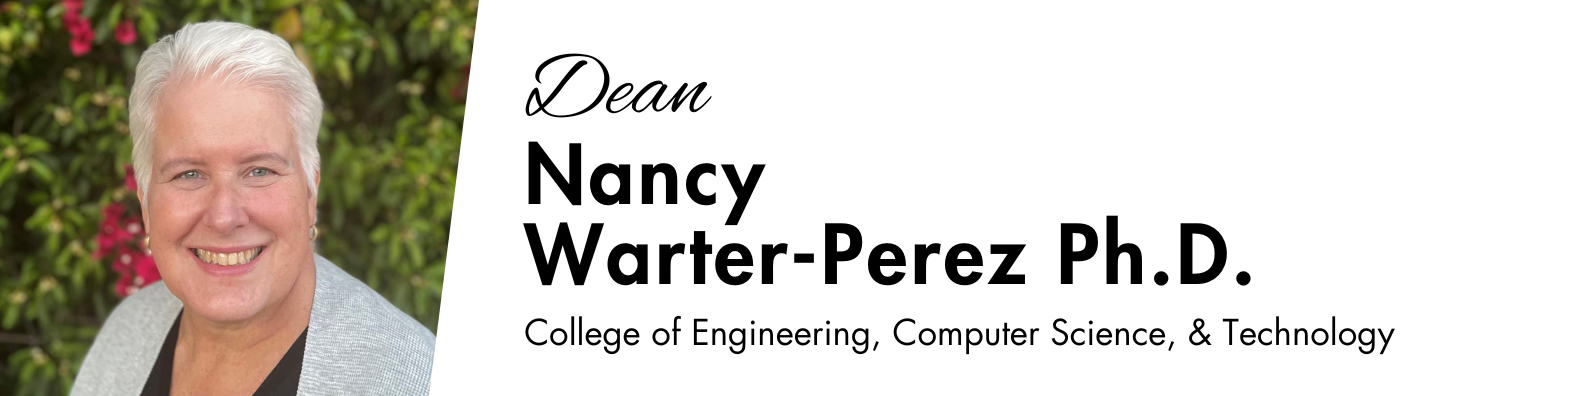 Dean Nancy Warter-Perez banner